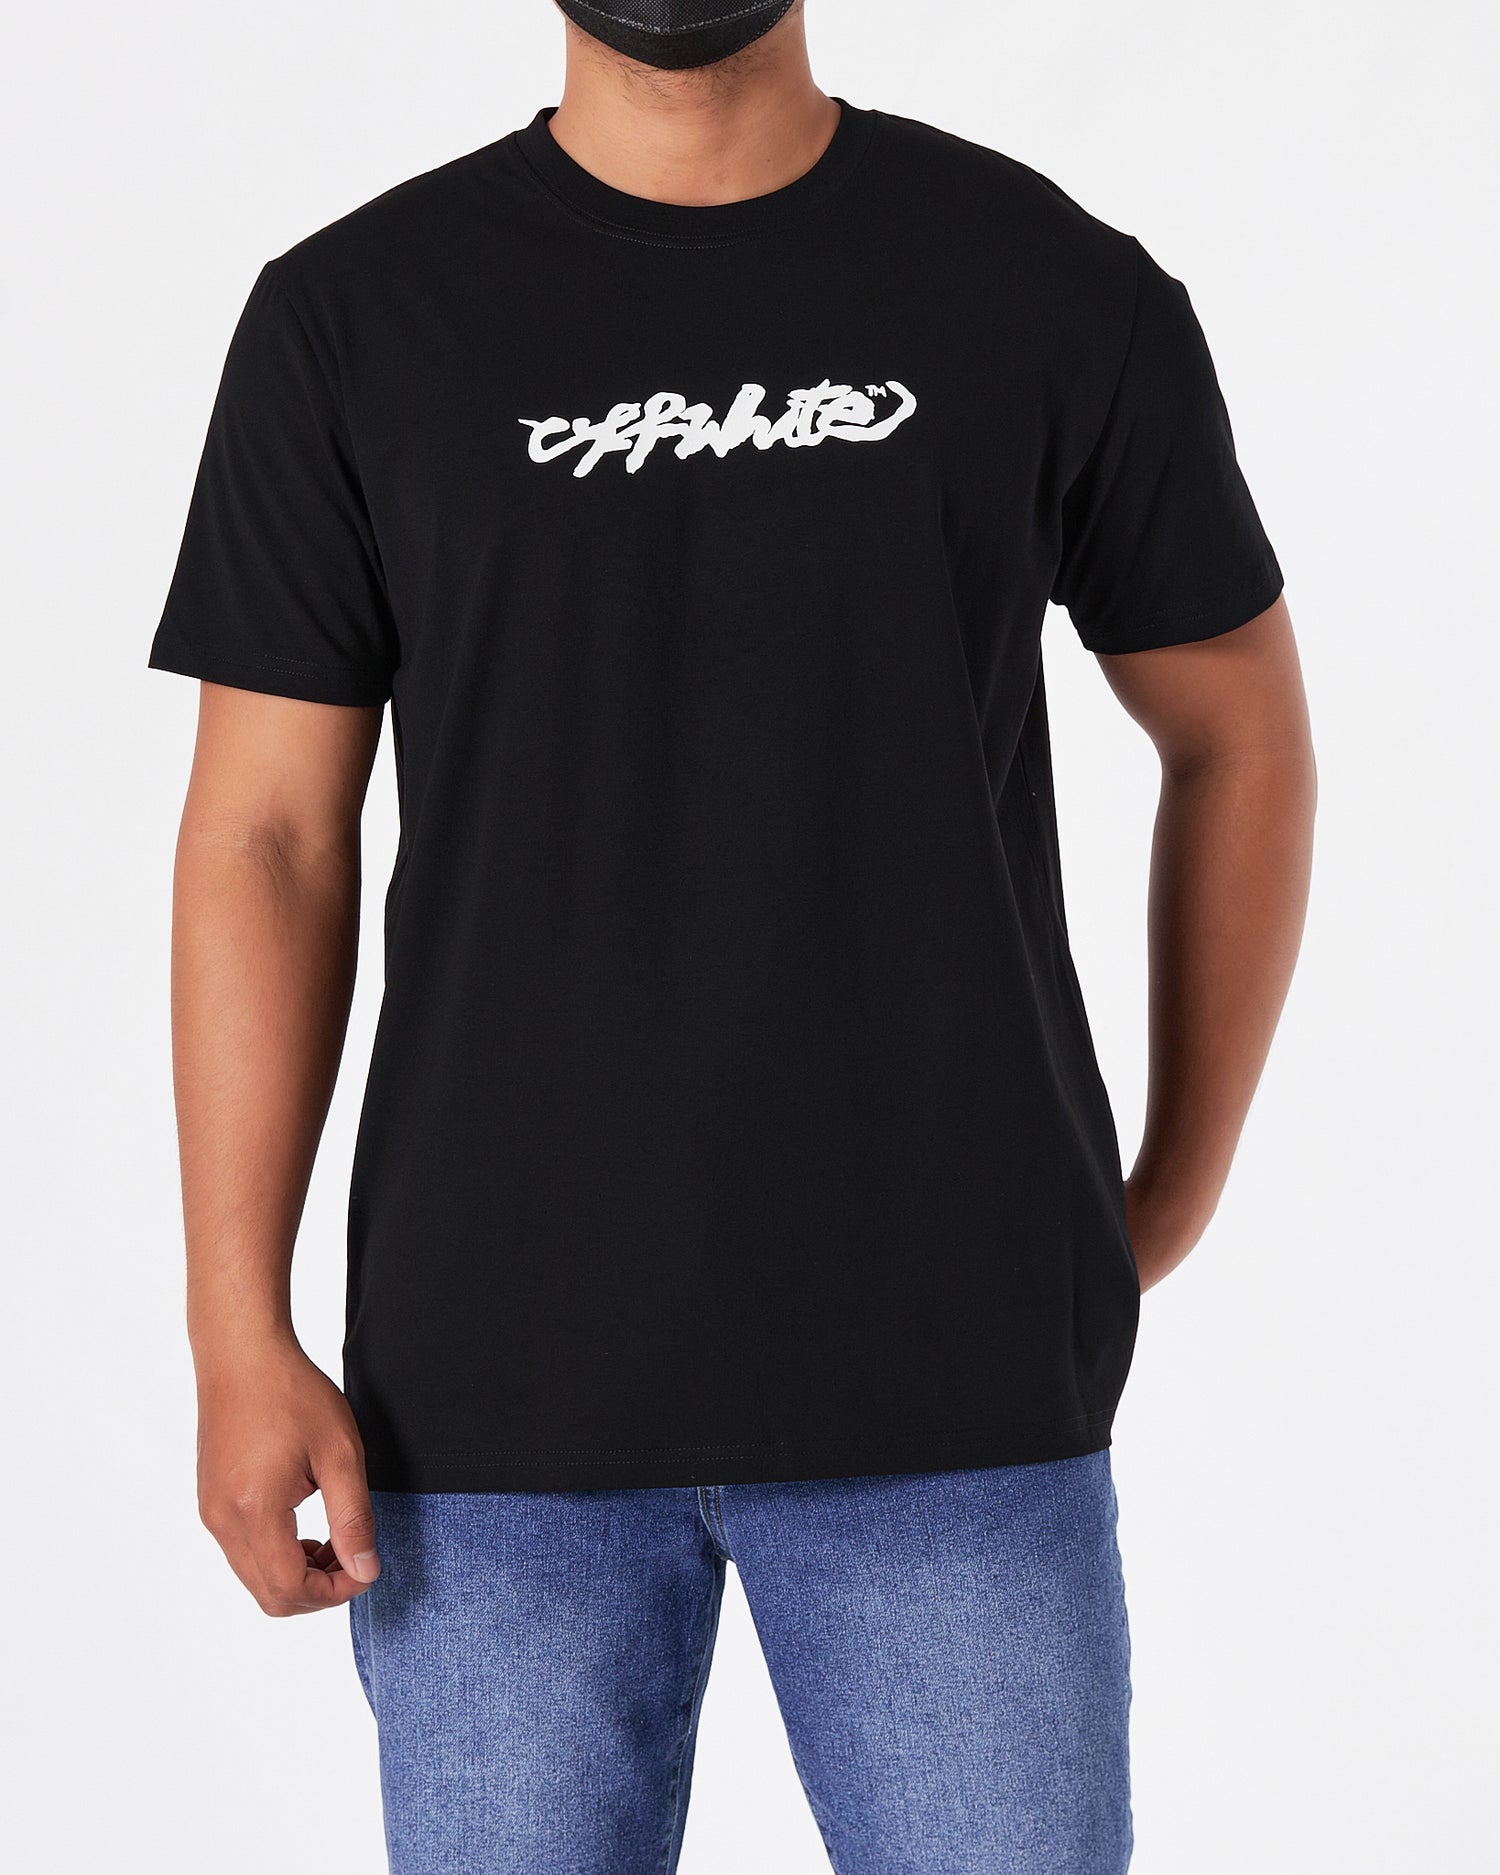 OW Arrow Back Printed Men Black T-Shirt 17.90